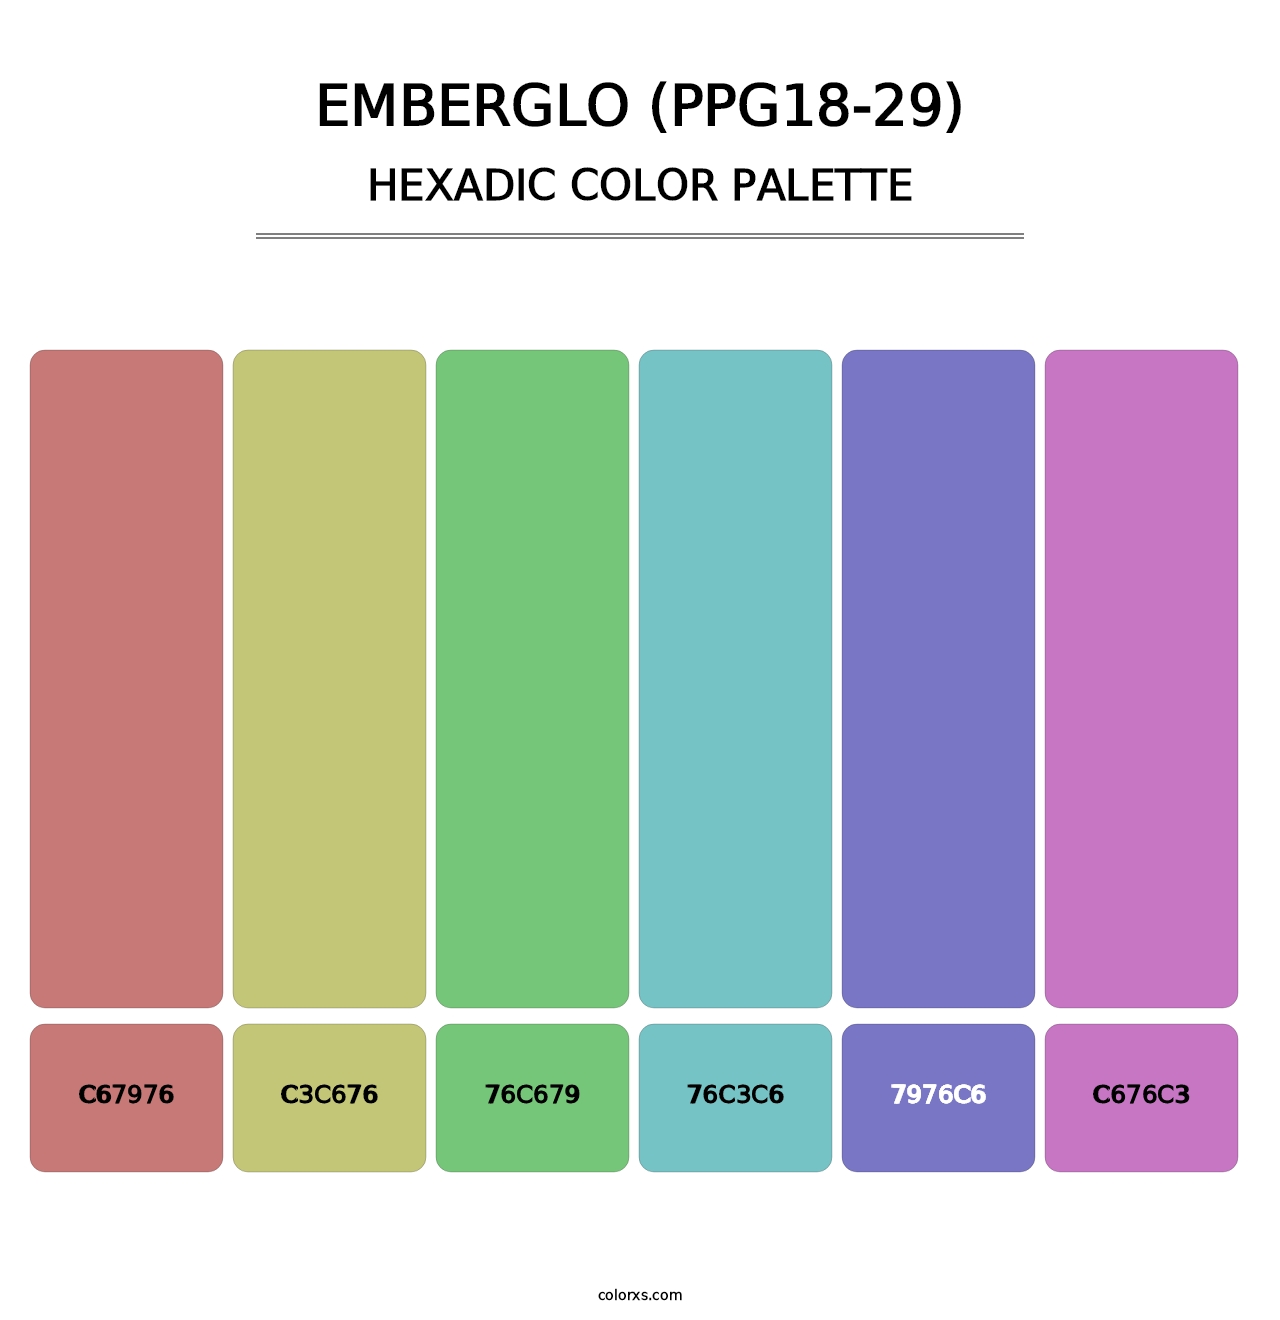 Emberglo (PPG18-29) - Hexadic Color Palette